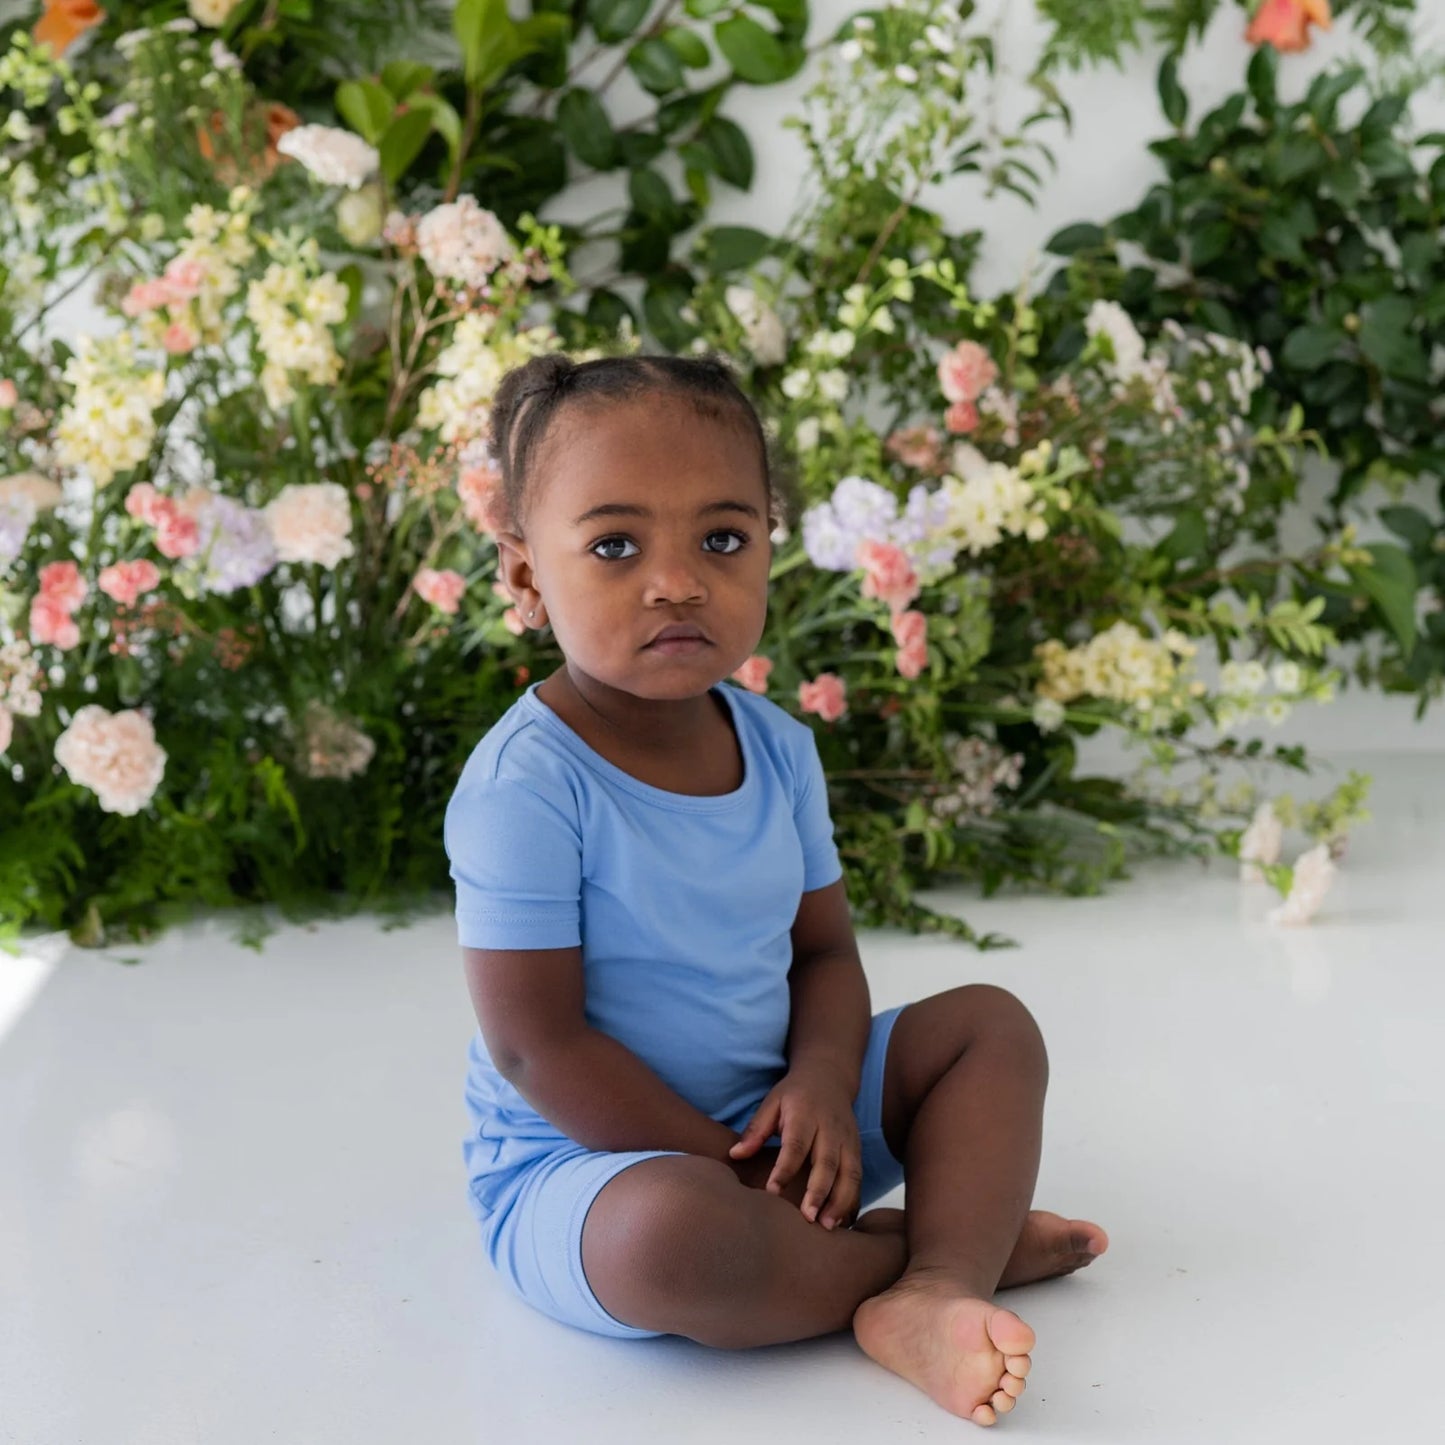 Kyte Baby - Periwinkle Short Sleeve Toddler Pajama Set